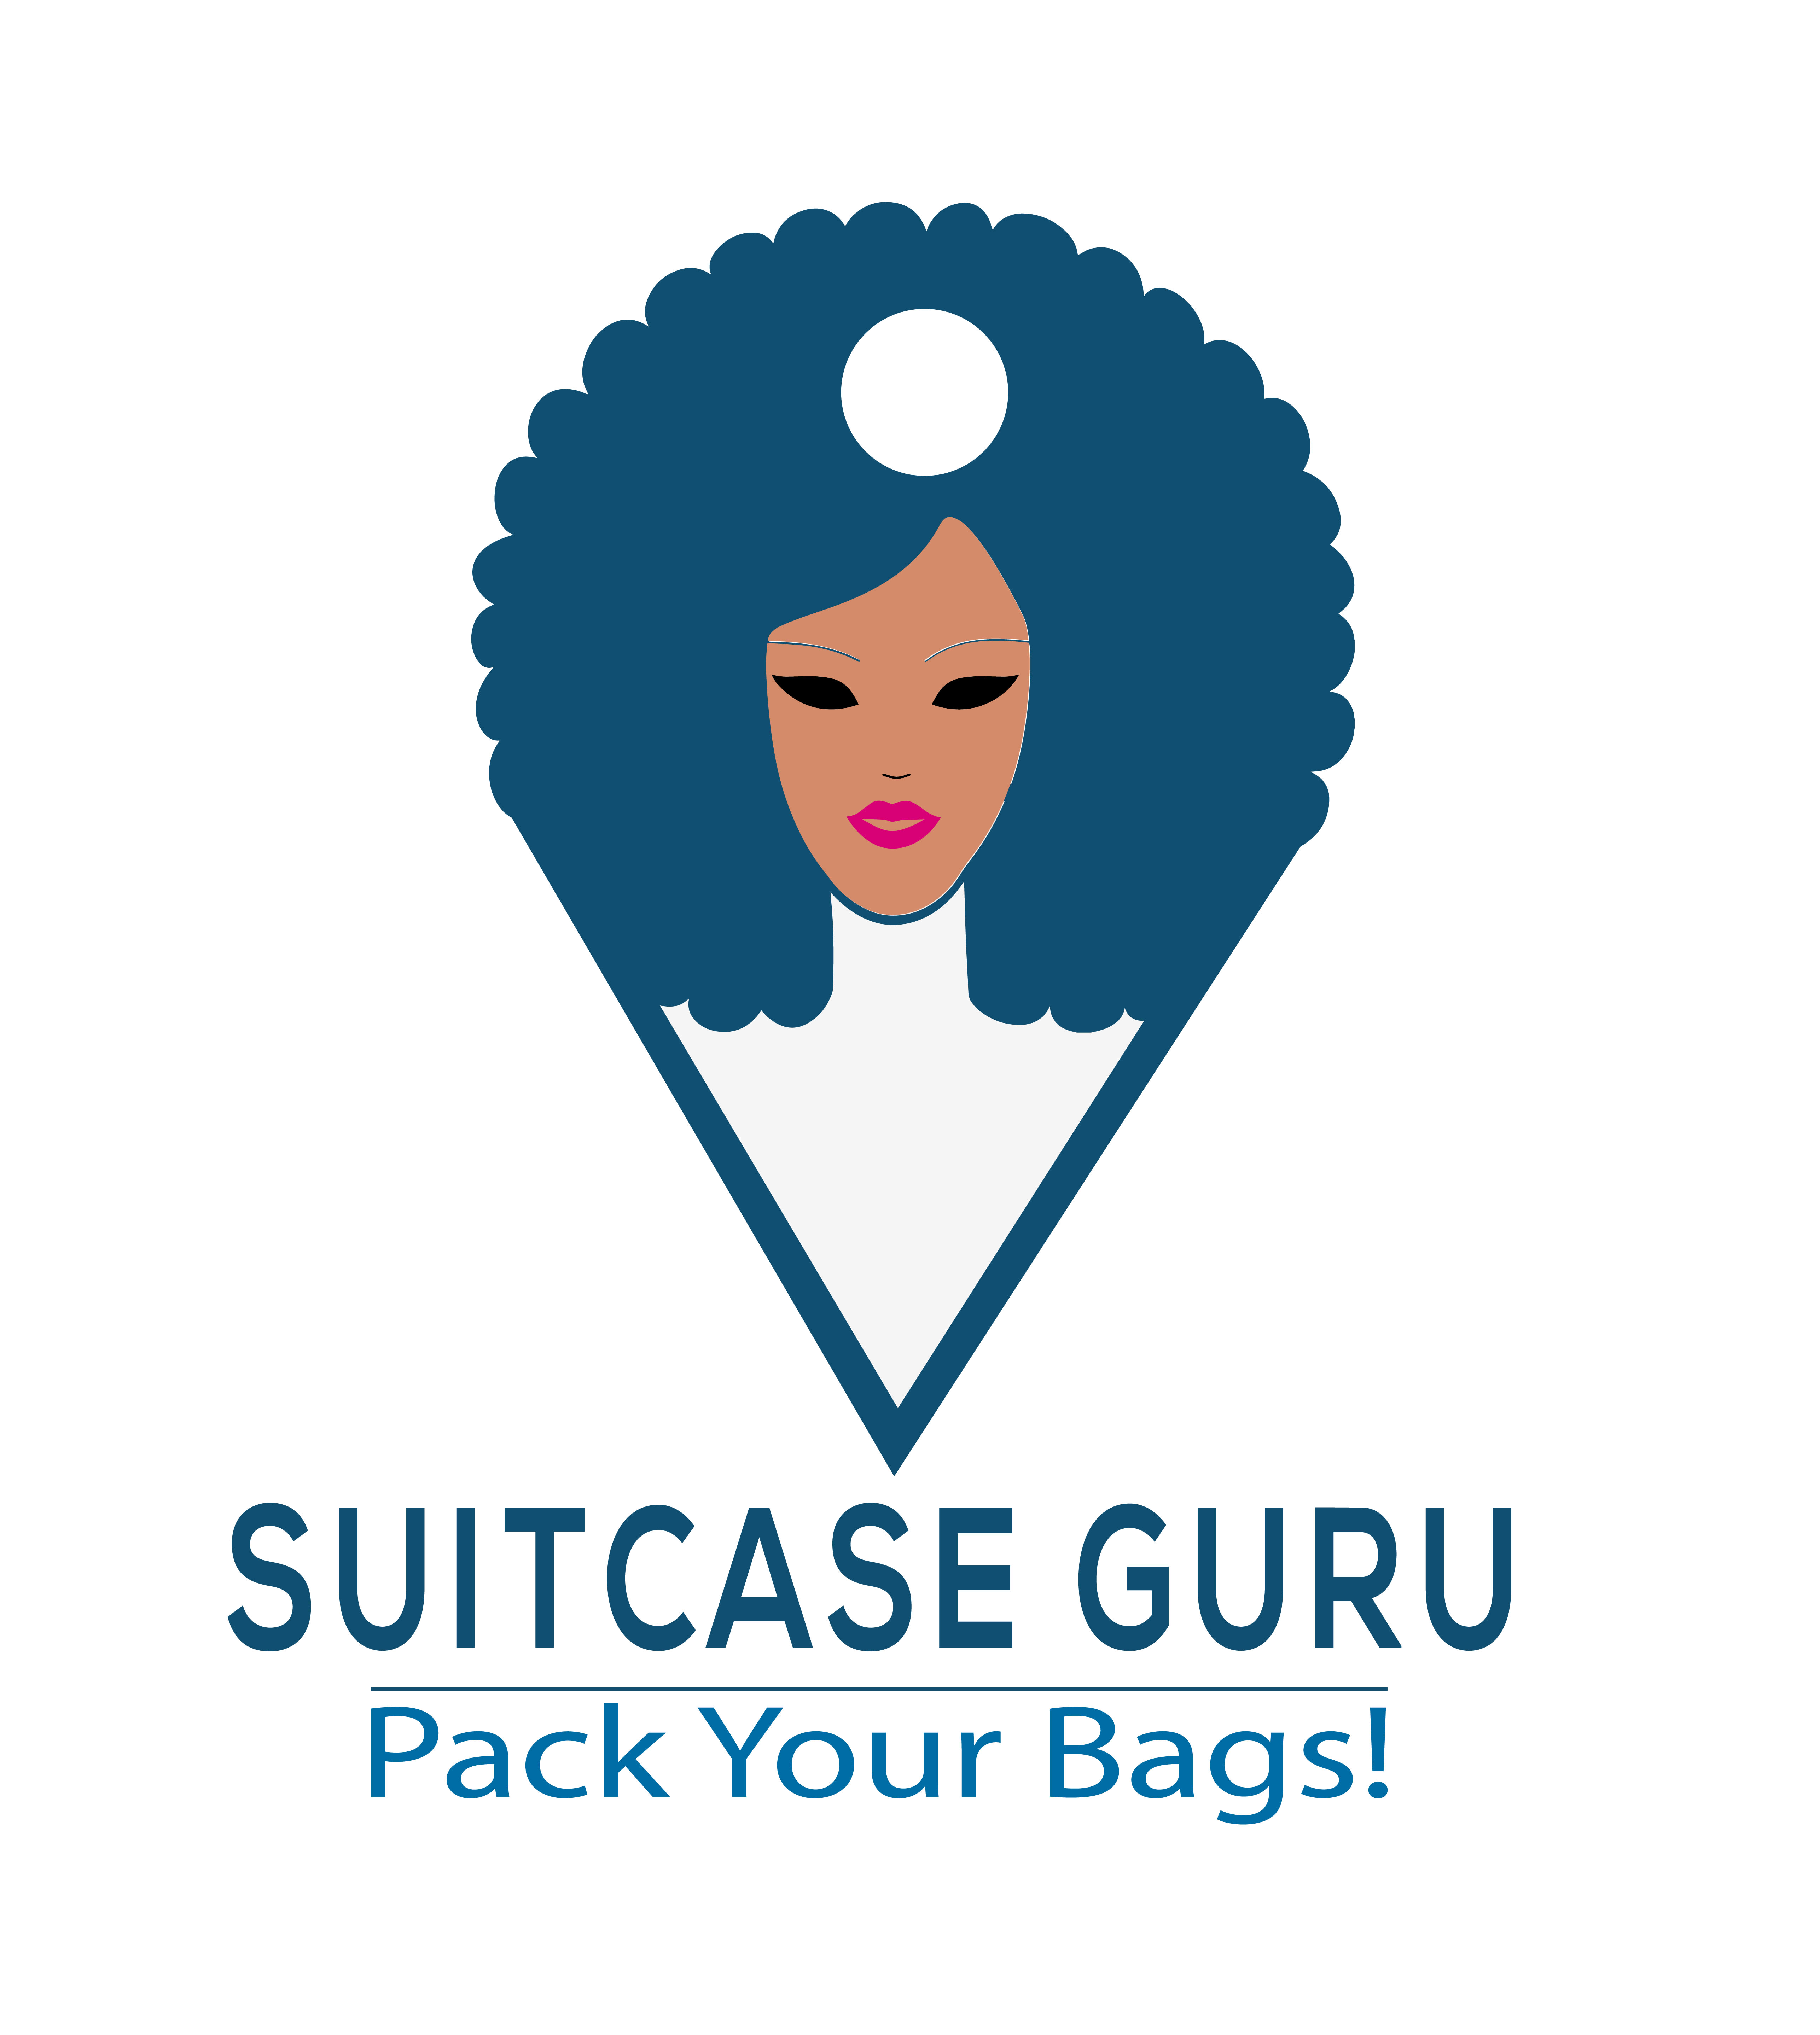 The Suitcase Guru